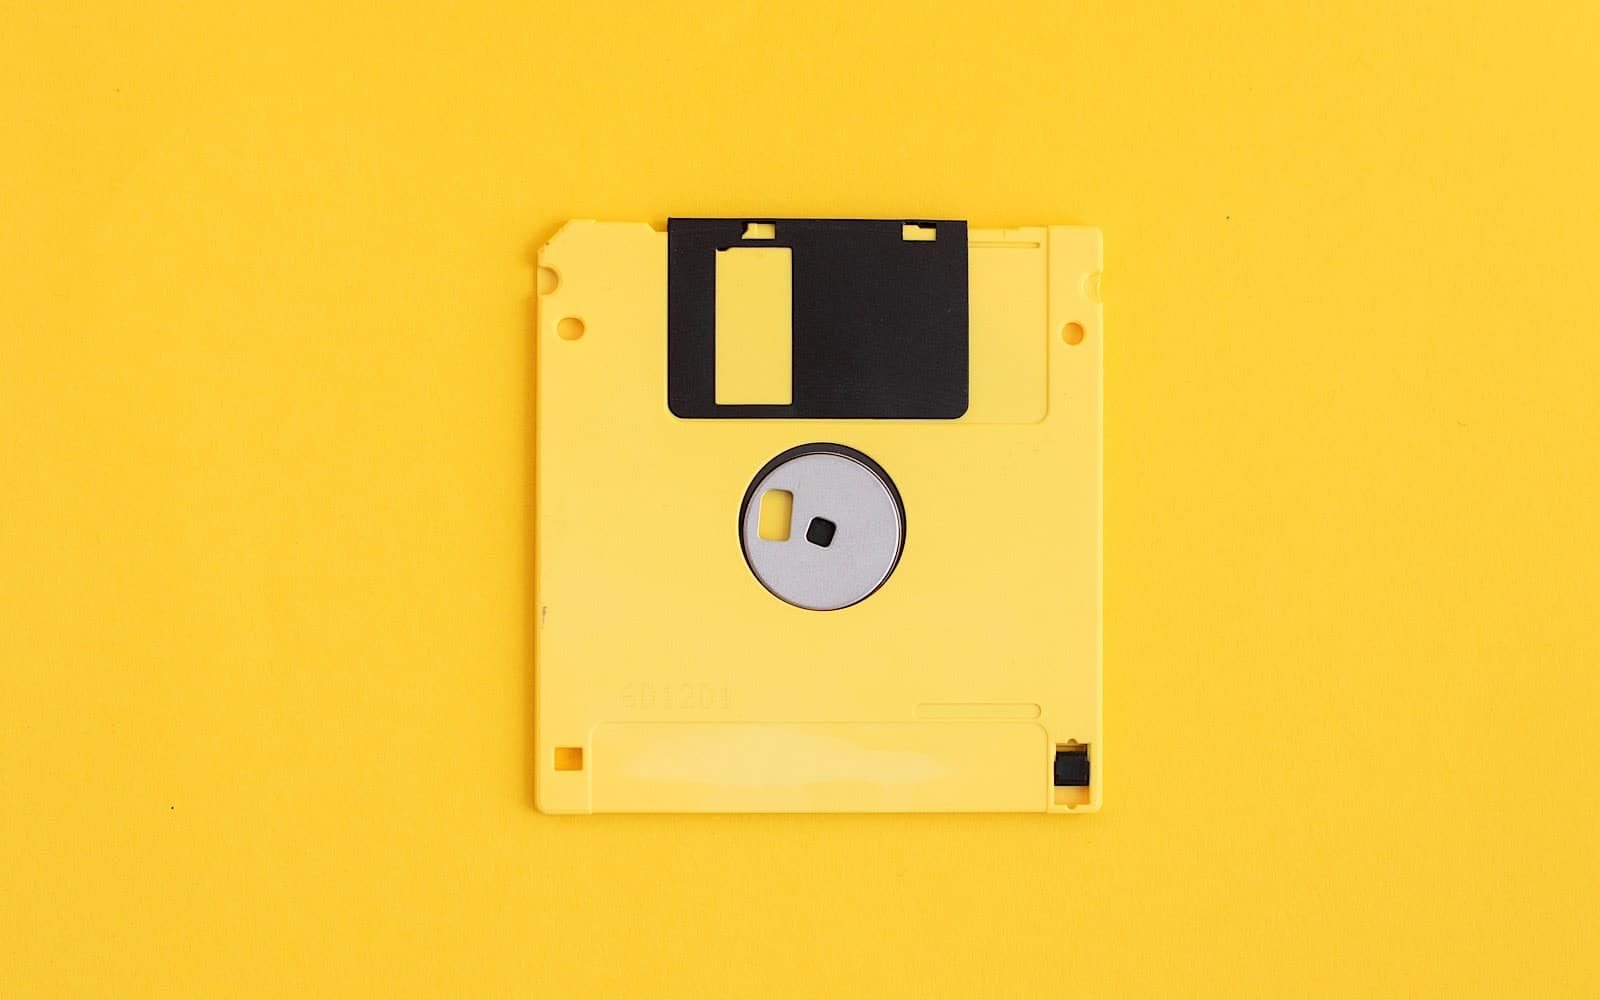 A floppy disk